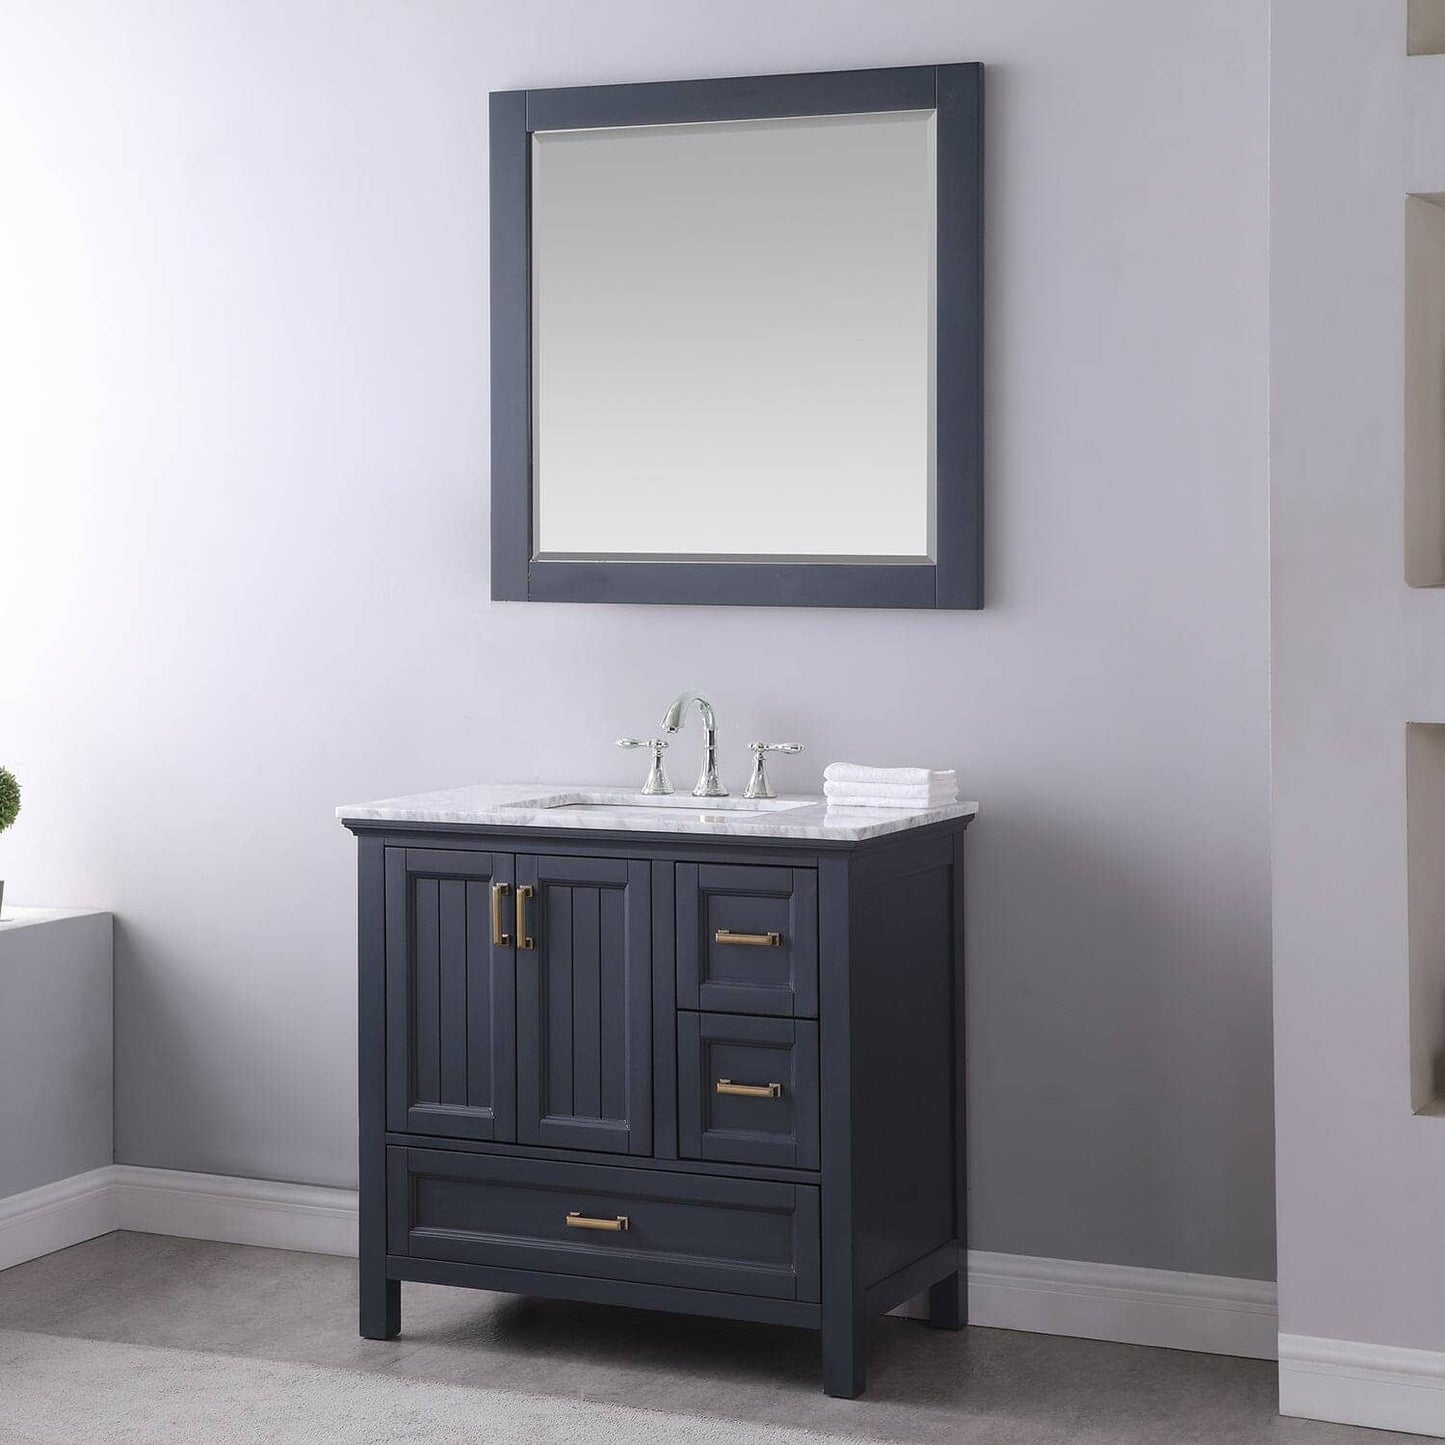 Bathroom Mirror - Altair Maribella 34W x 36H - 535030-MIR-CB